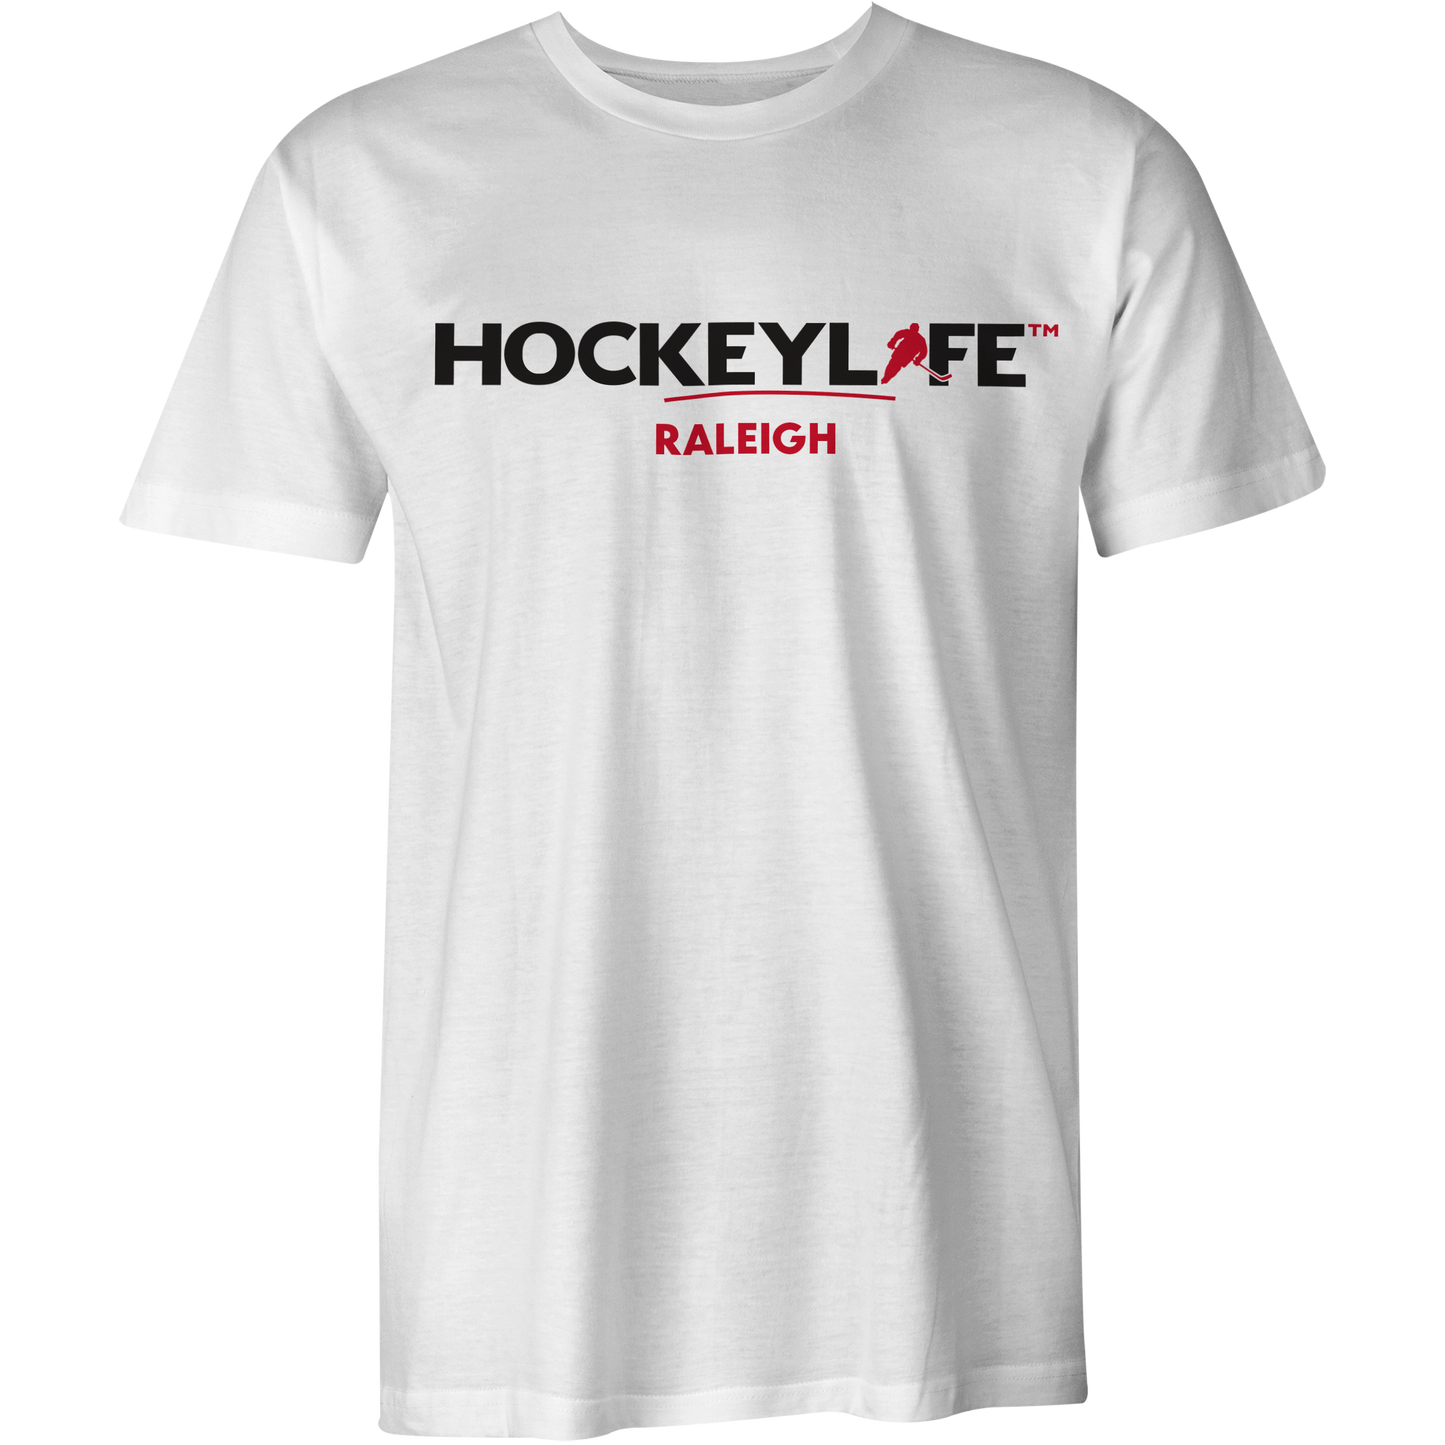 HockeyLife Raleigh Tee Shirt